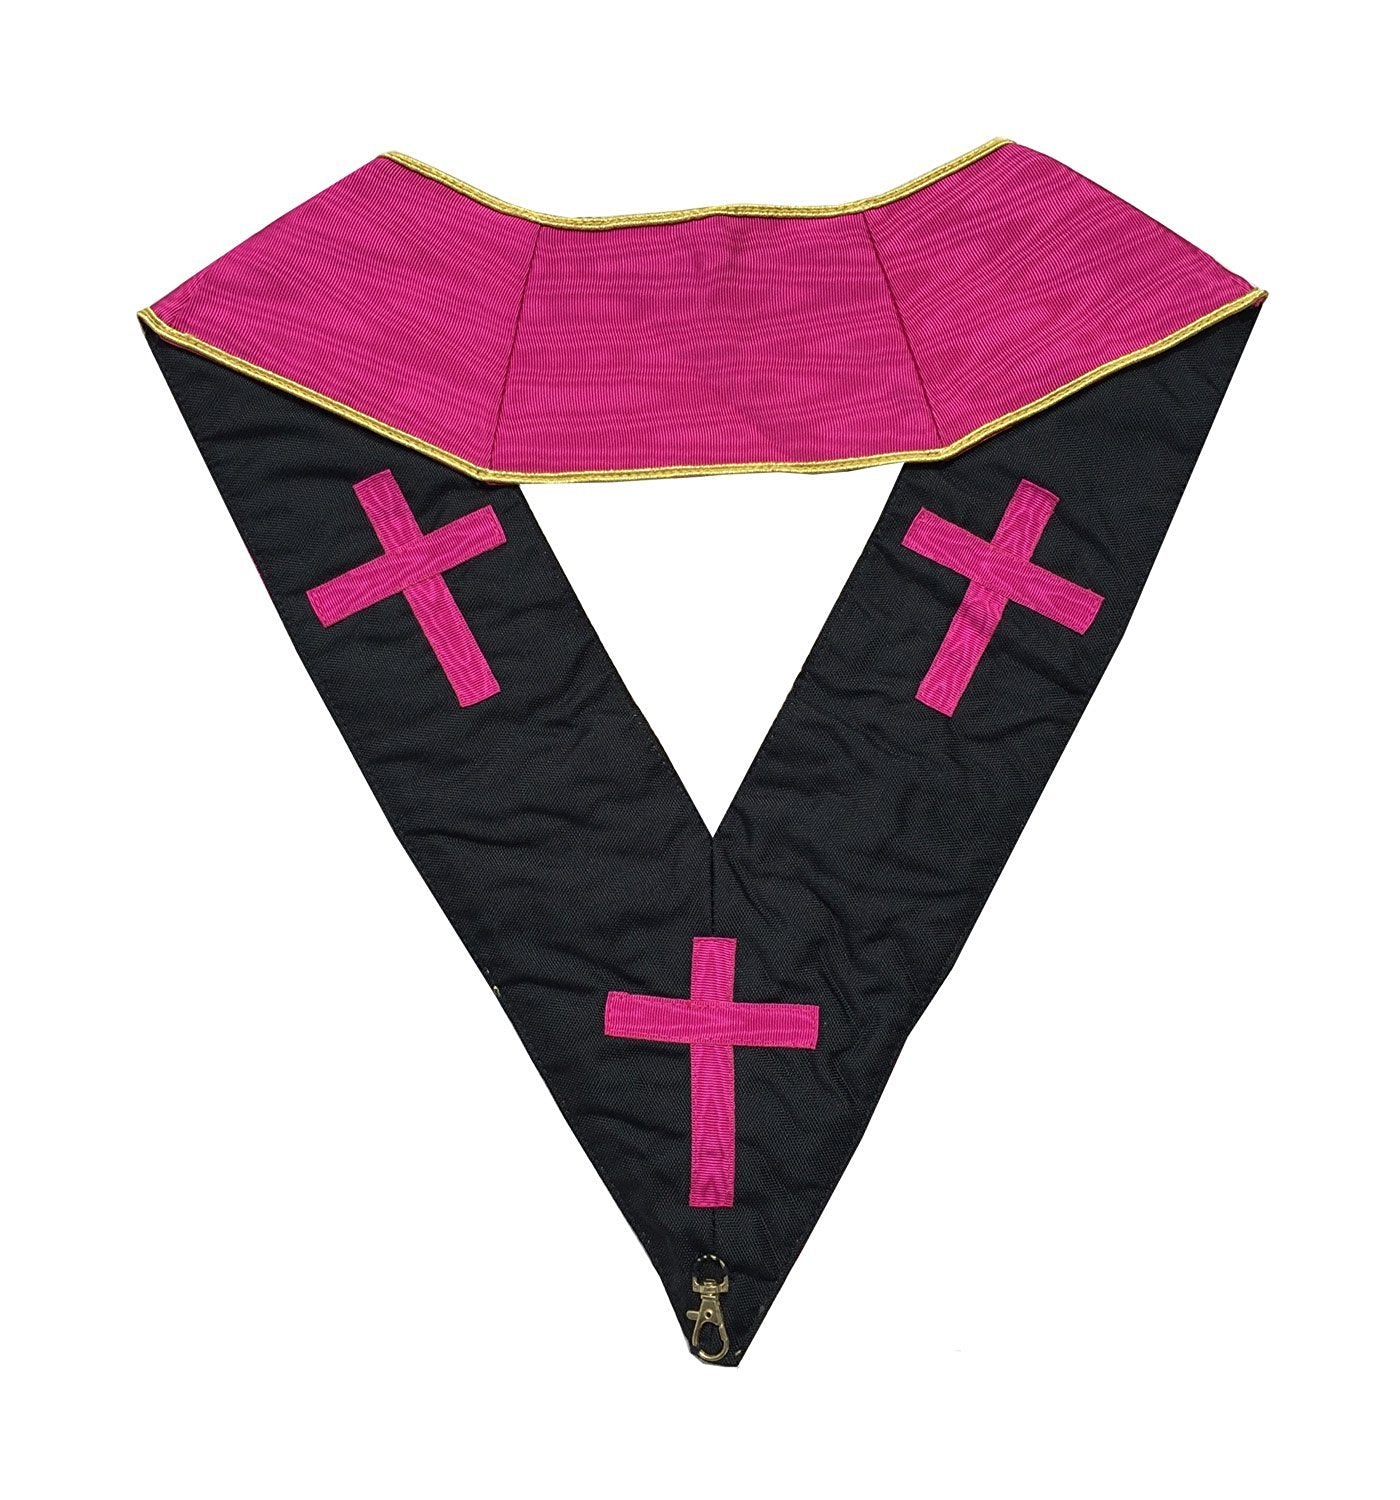 18th Degree Scottish Rite Collar - Pink Moire - Bricks Masons